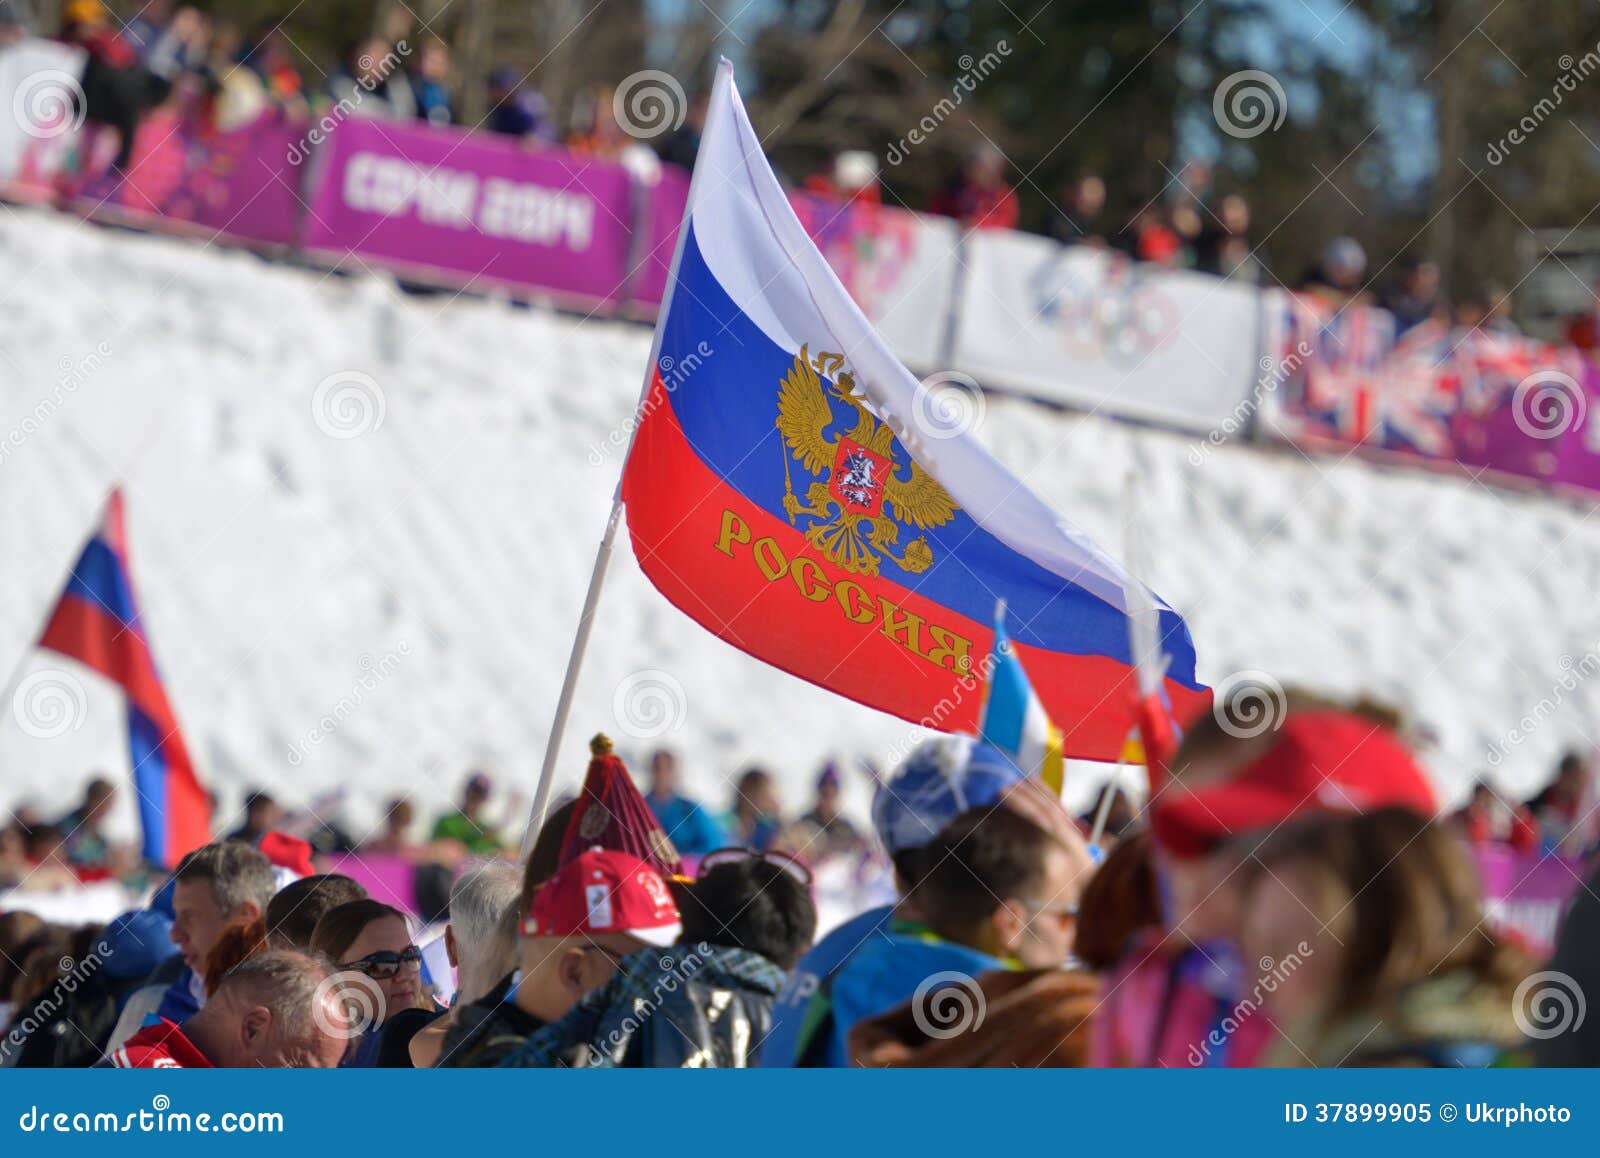 Flag of Russia: РОССИЯ (Community)